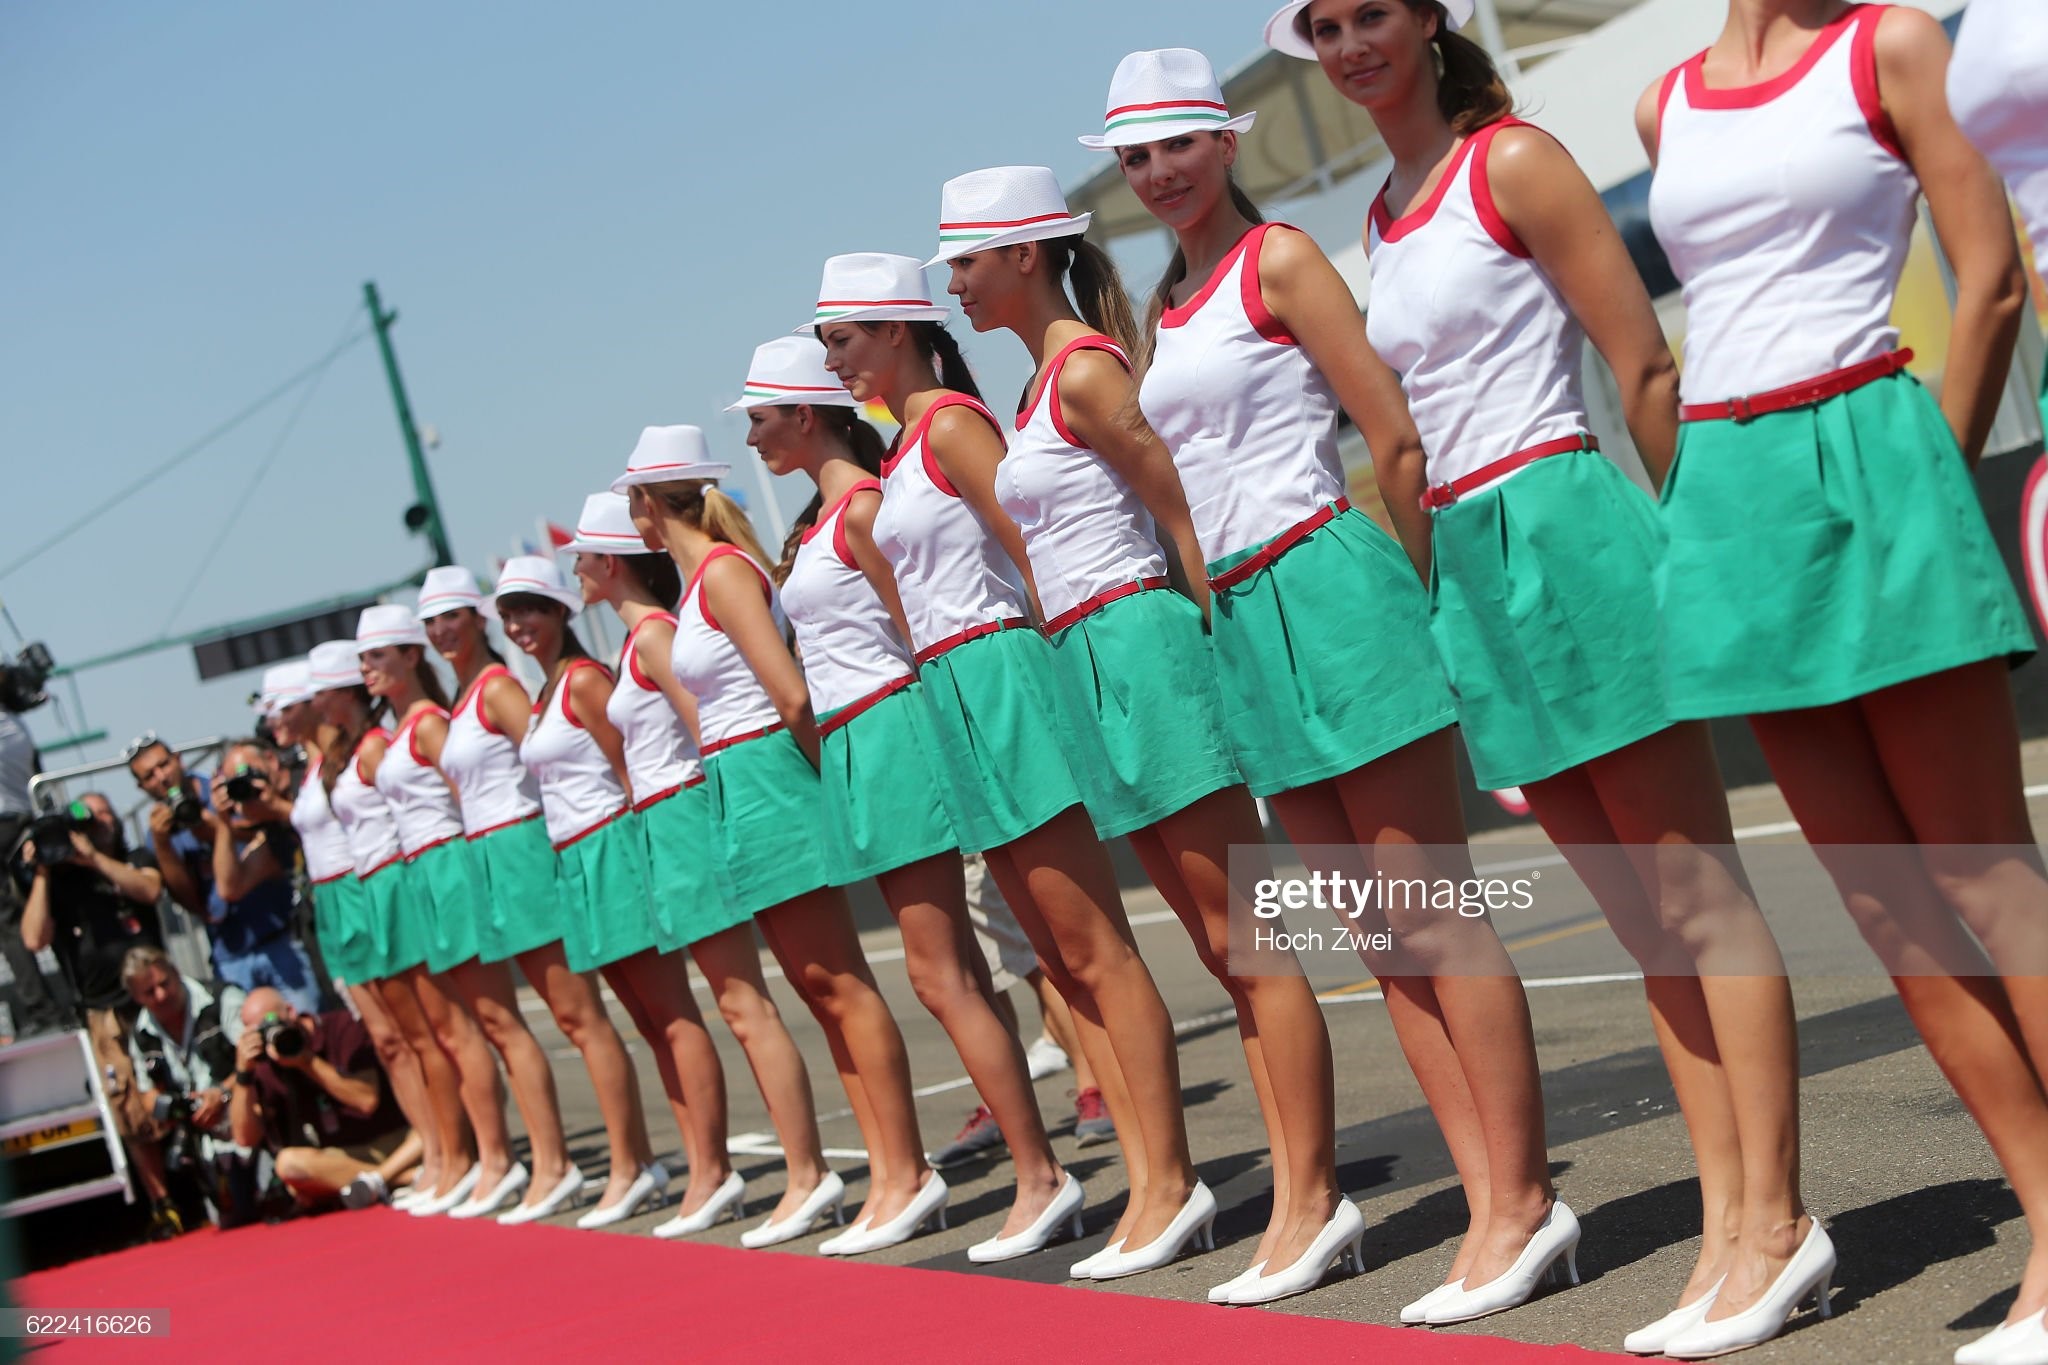 FIA Formula One World Championship 2013, Grand Prix of Hungary, grid girls, July 28, 2013. 